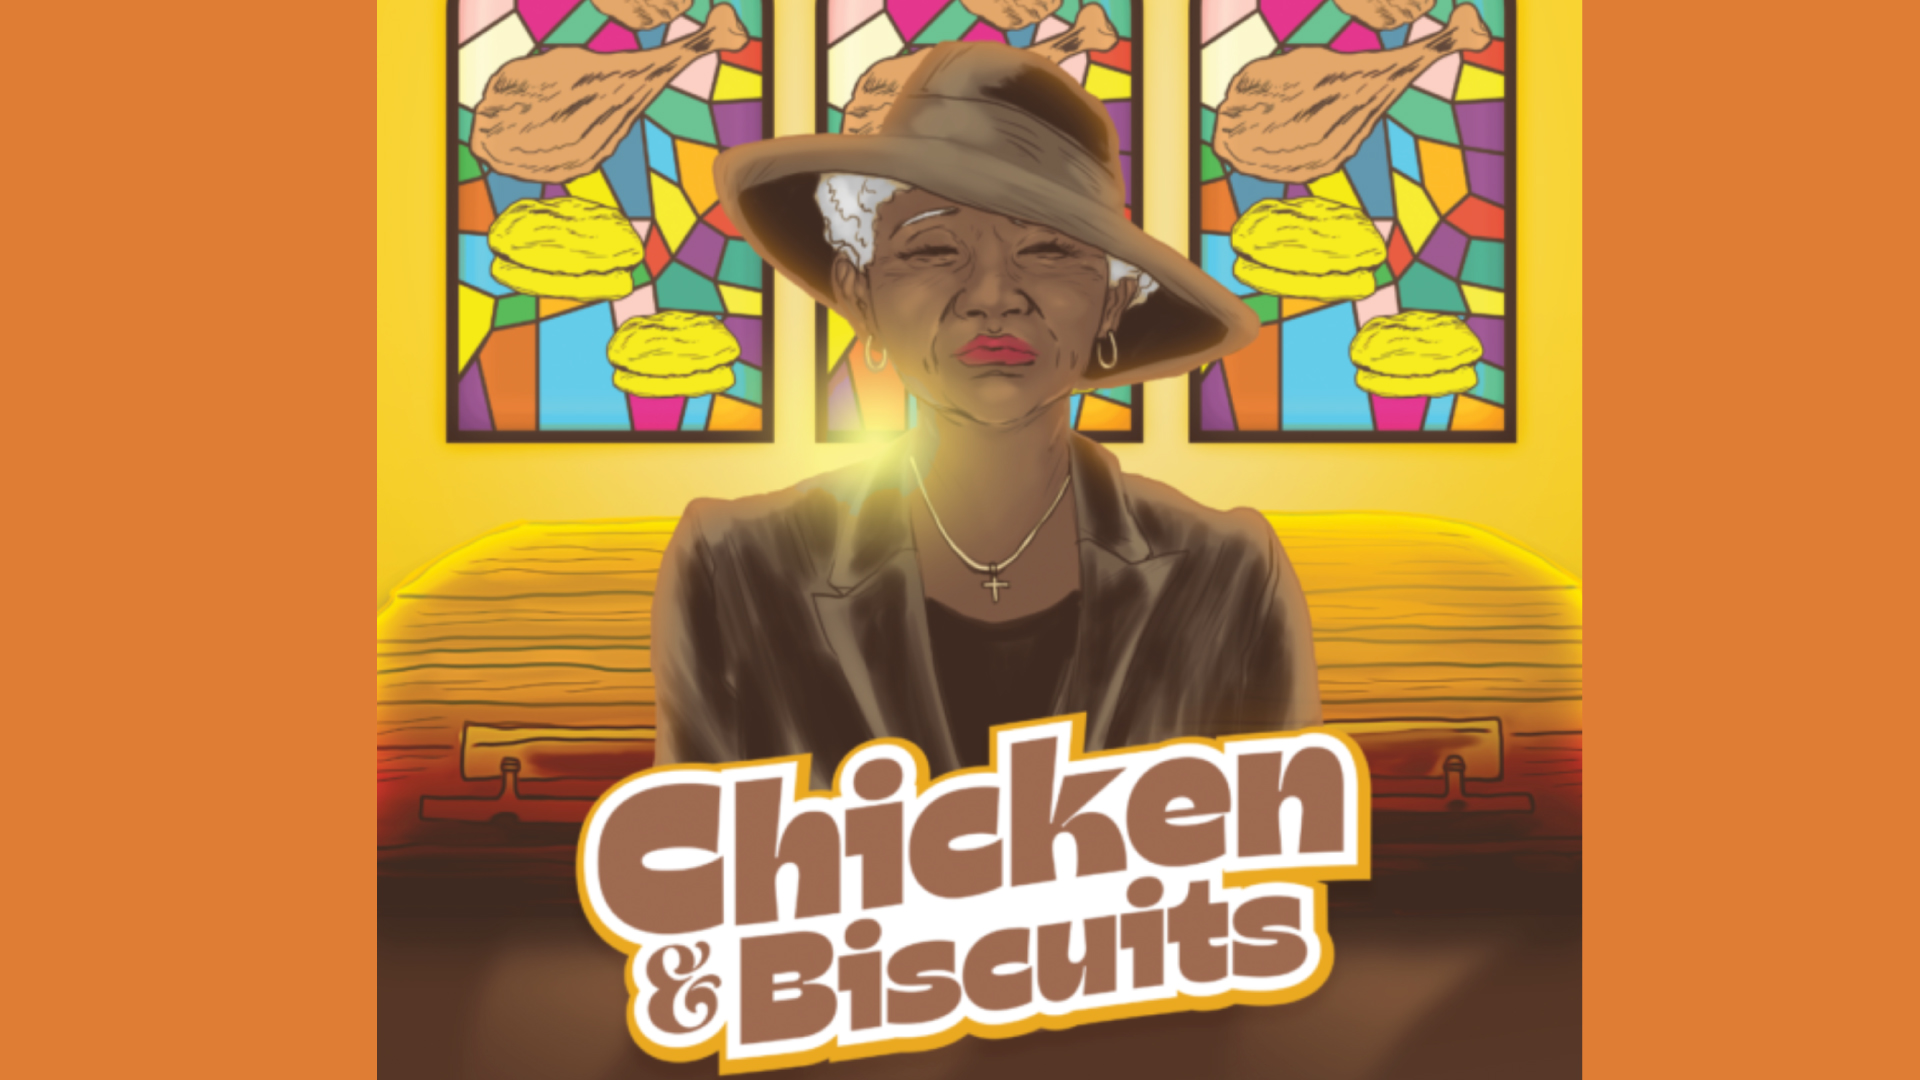 Chicken & Biscuits play